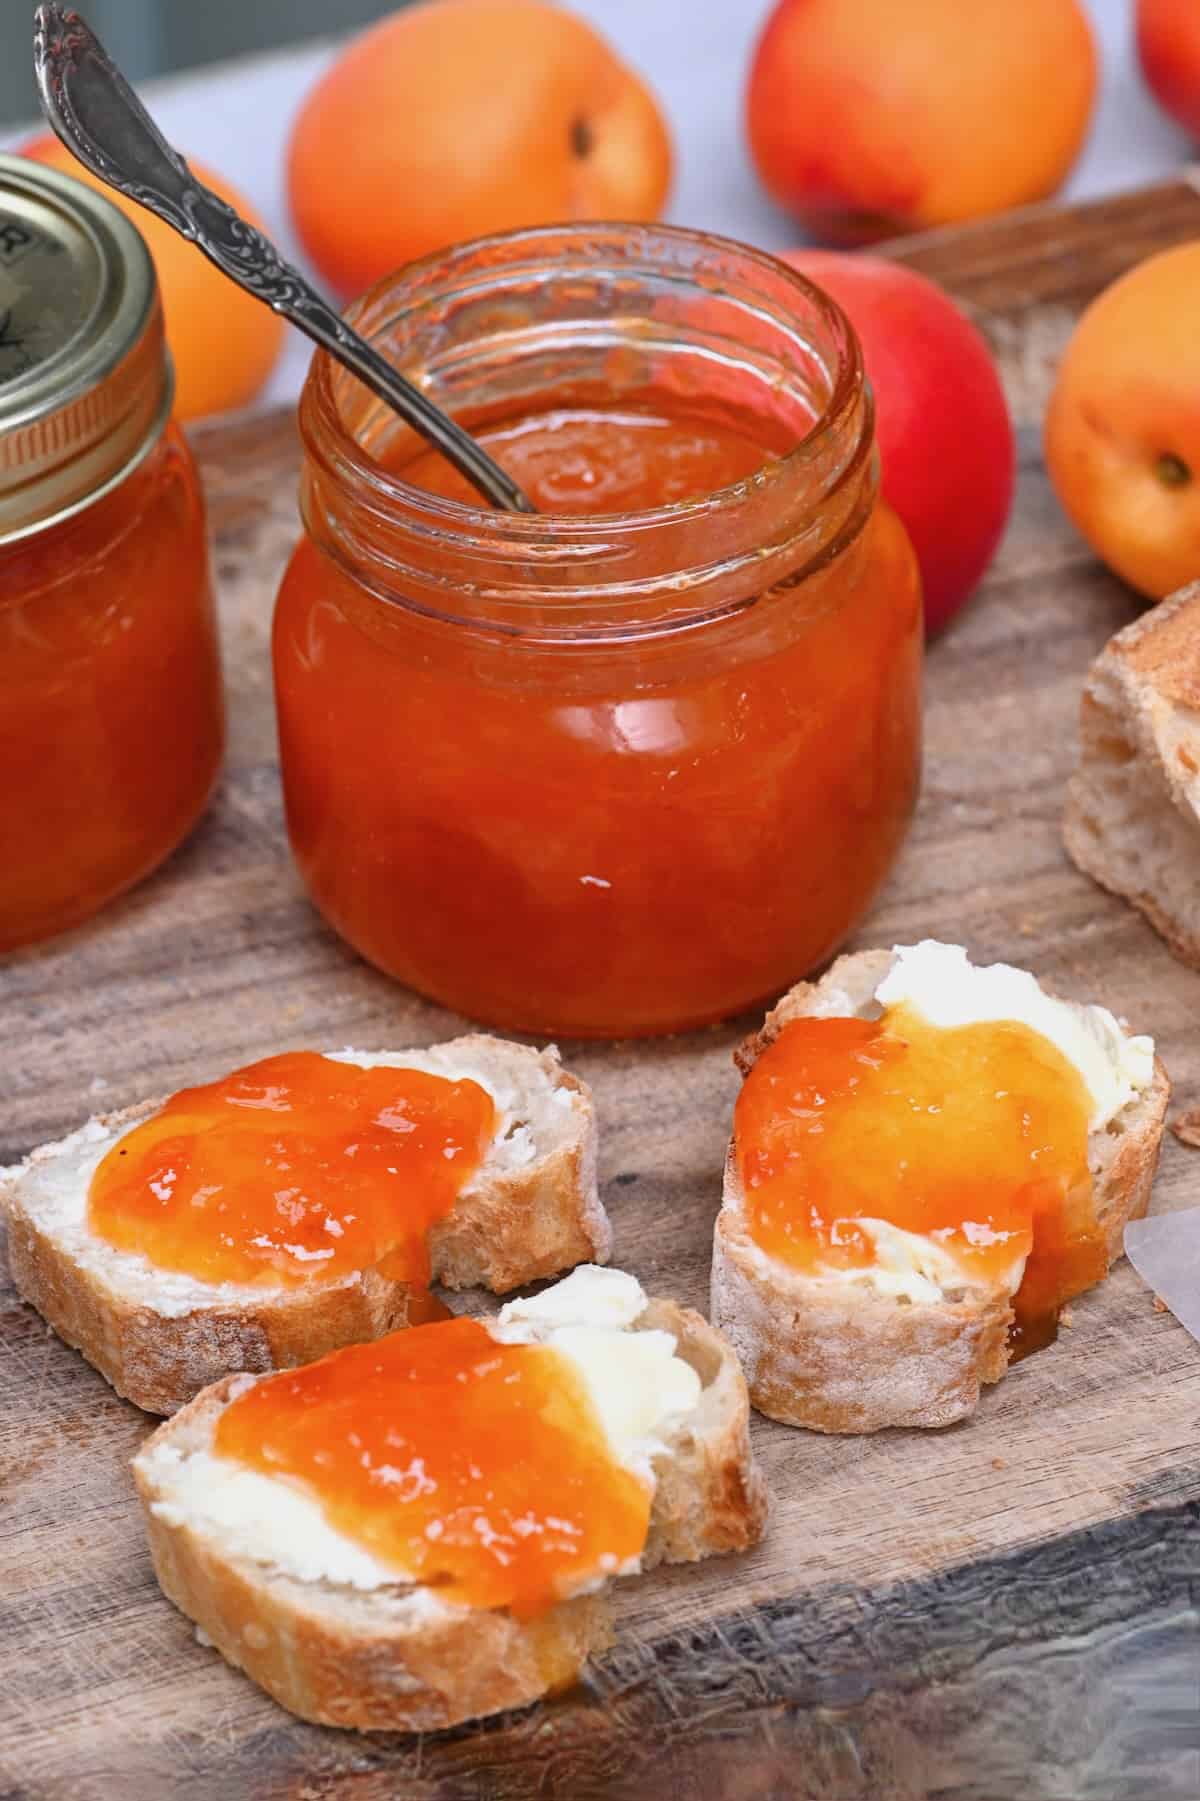 Homemade apricot jam on bread